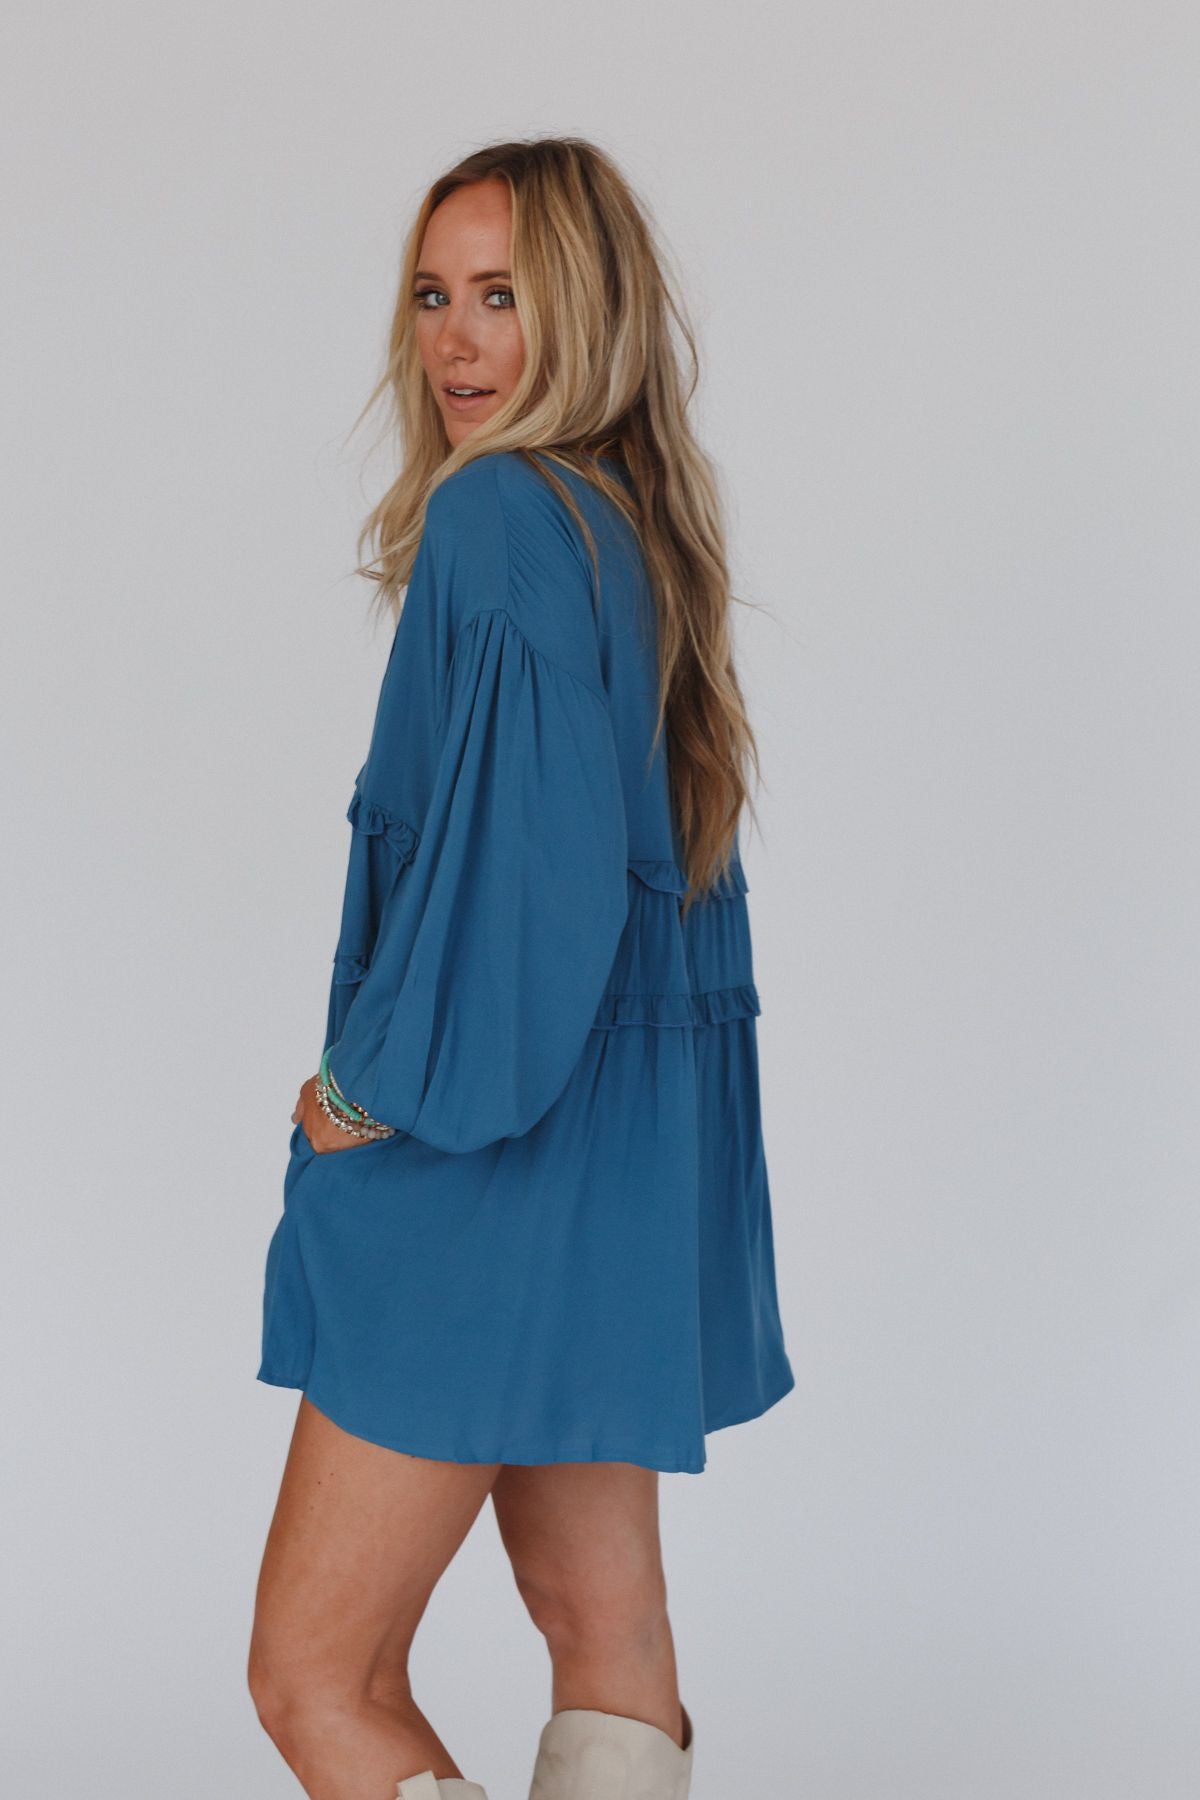 All Things New Mini Dress - Slate Blue